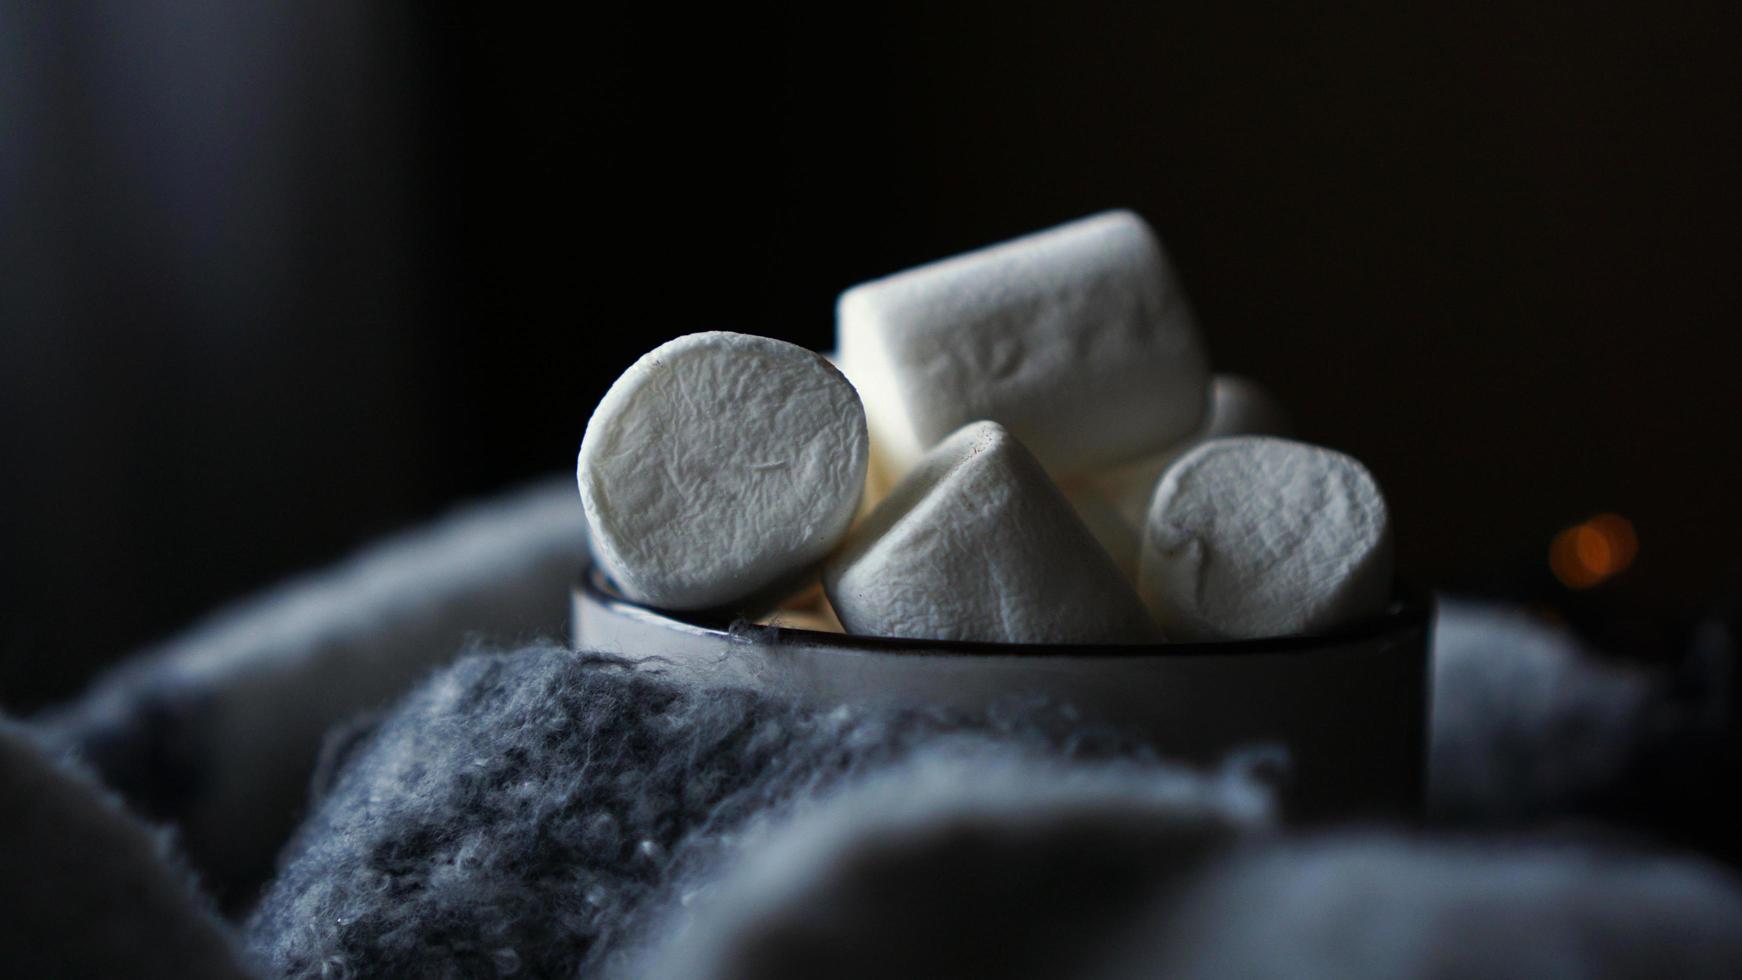 Hot cocoa with marshmallow in a white ceramic mug - dark background photo